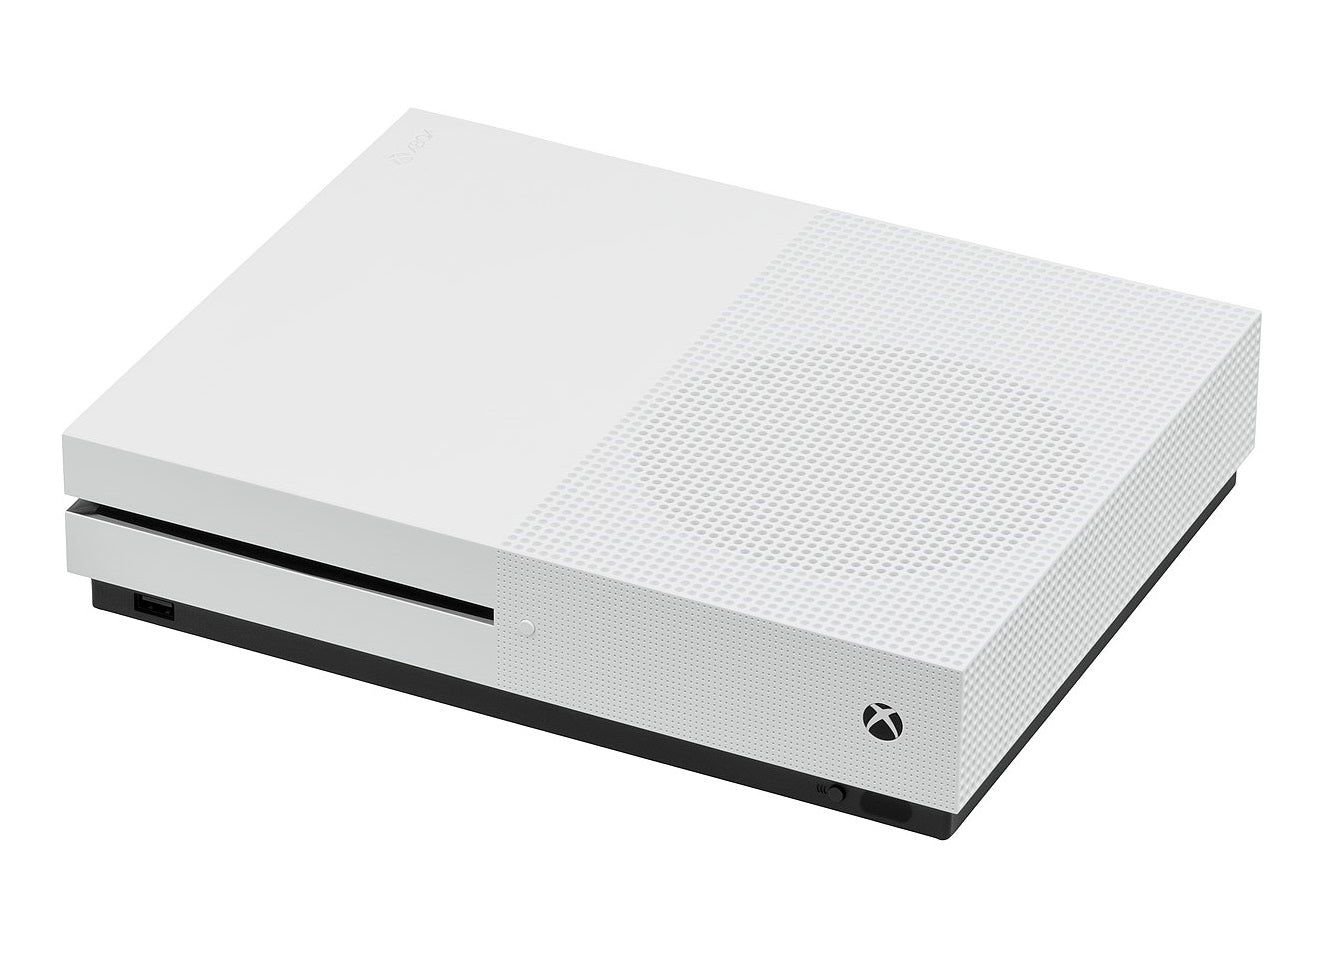 Microsoft Xbox one